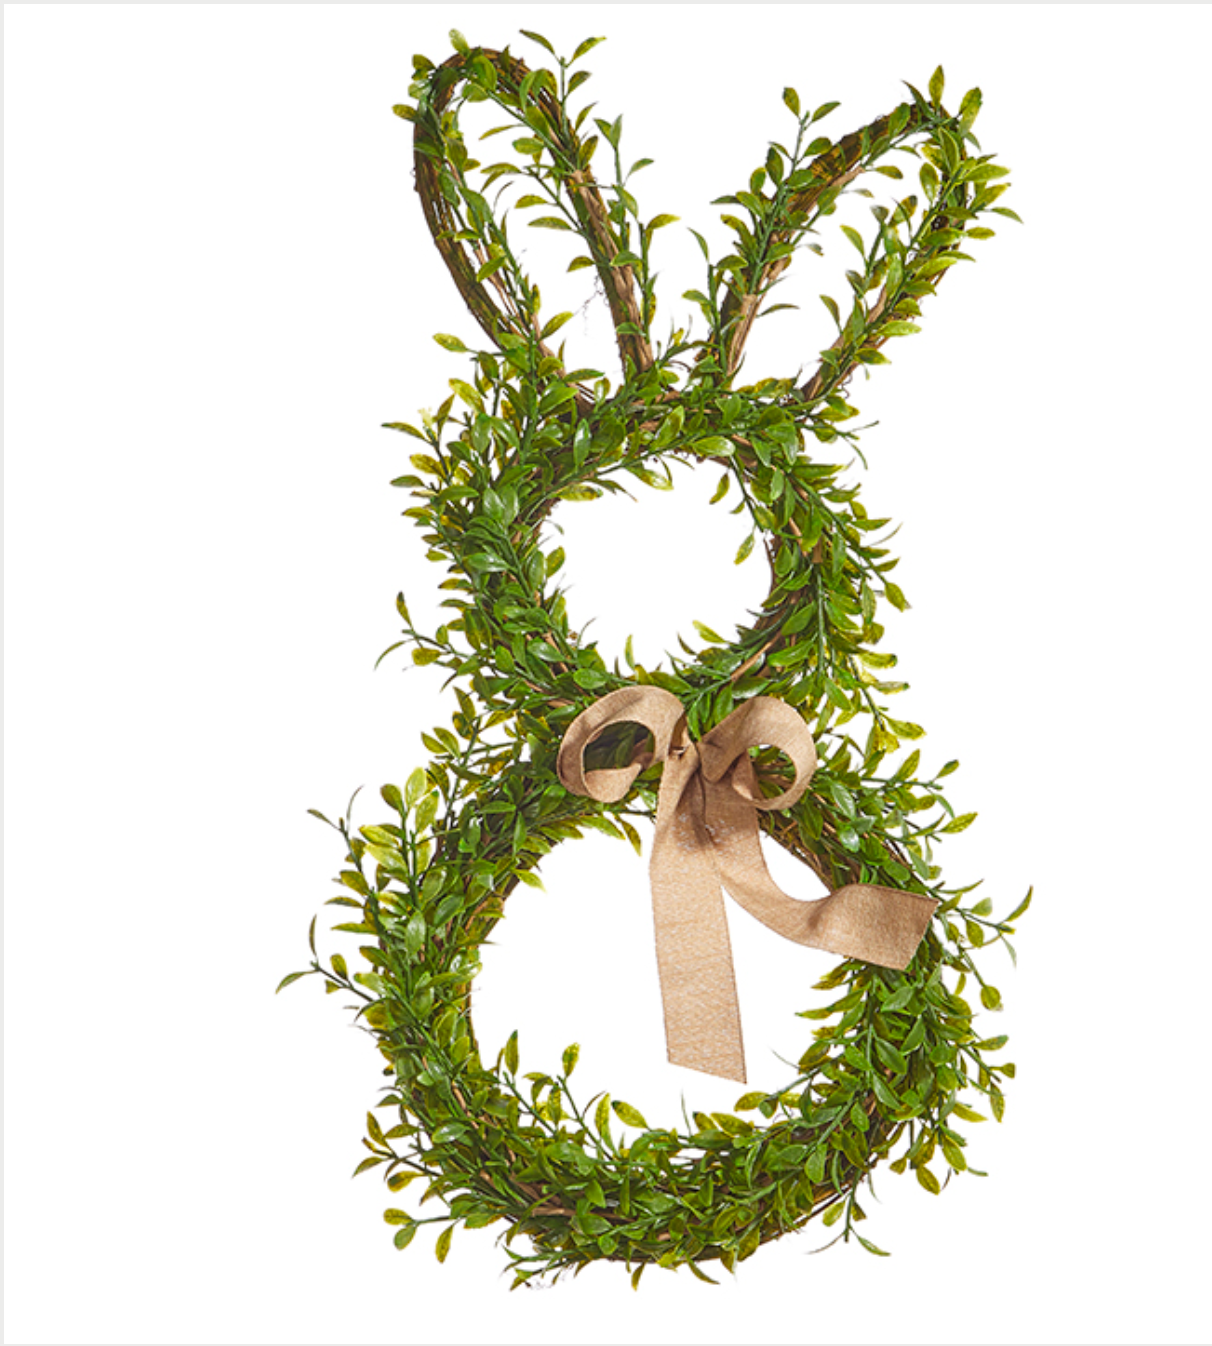 Boxwood bunny wreath